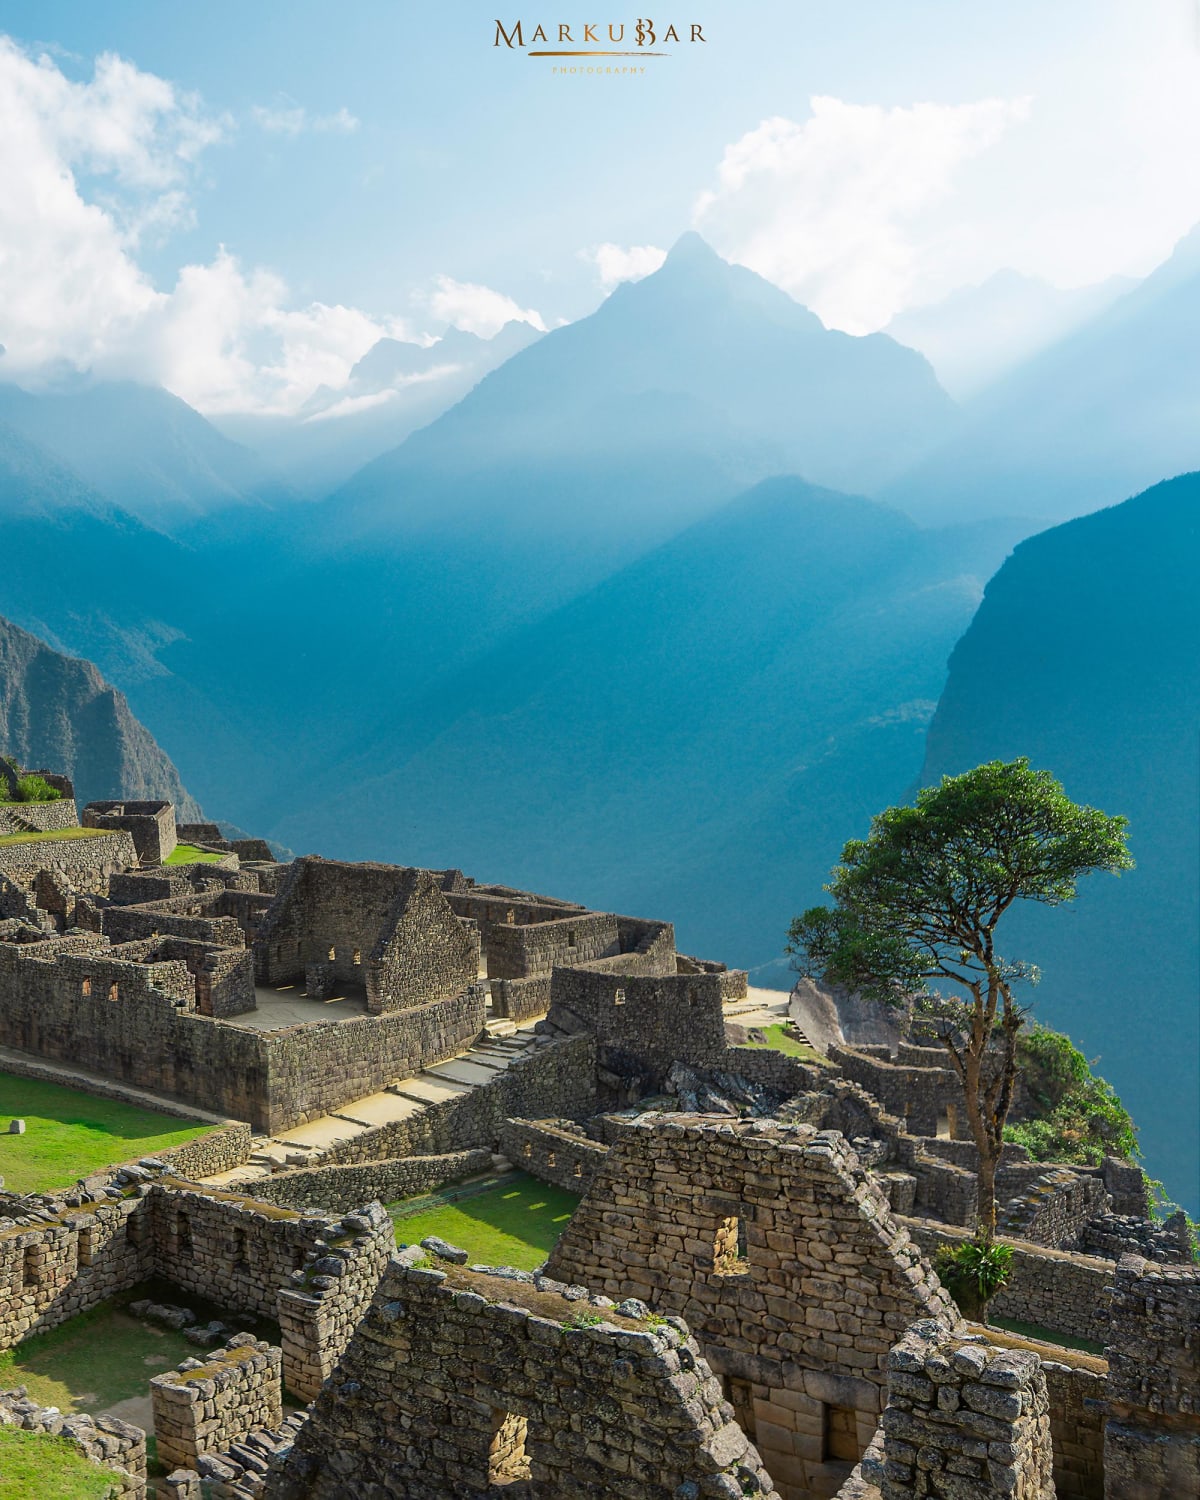 The mountains surrounding Machu Picchu, Peru